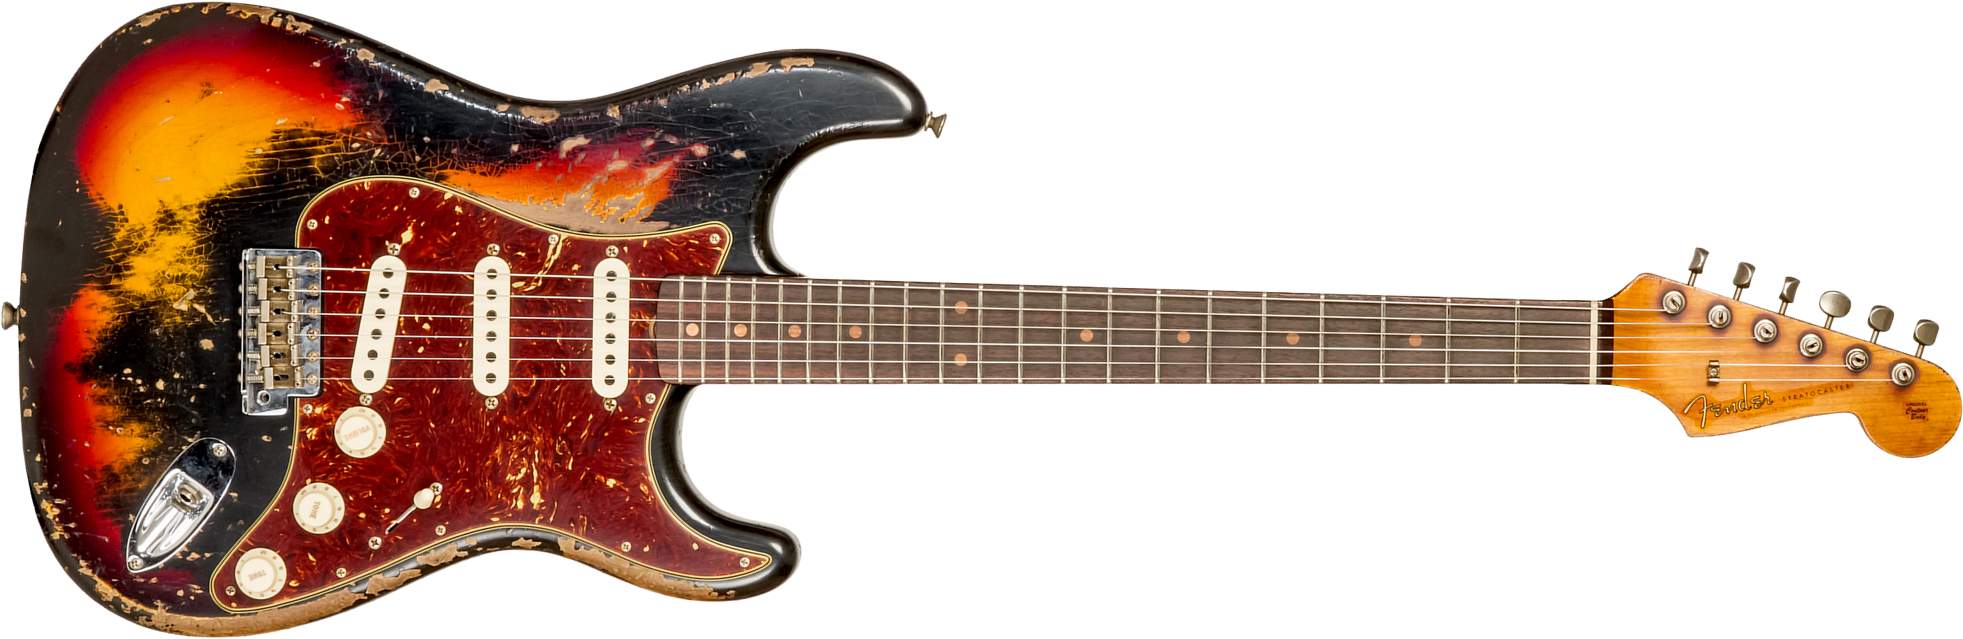 Fender Custom Shop Strat 1961 3s Trem Rw #cz576153 - Super Heavy Relic Black O. 3-color Sunburst - Guitarra eléctrica con forma de str. - Main picture